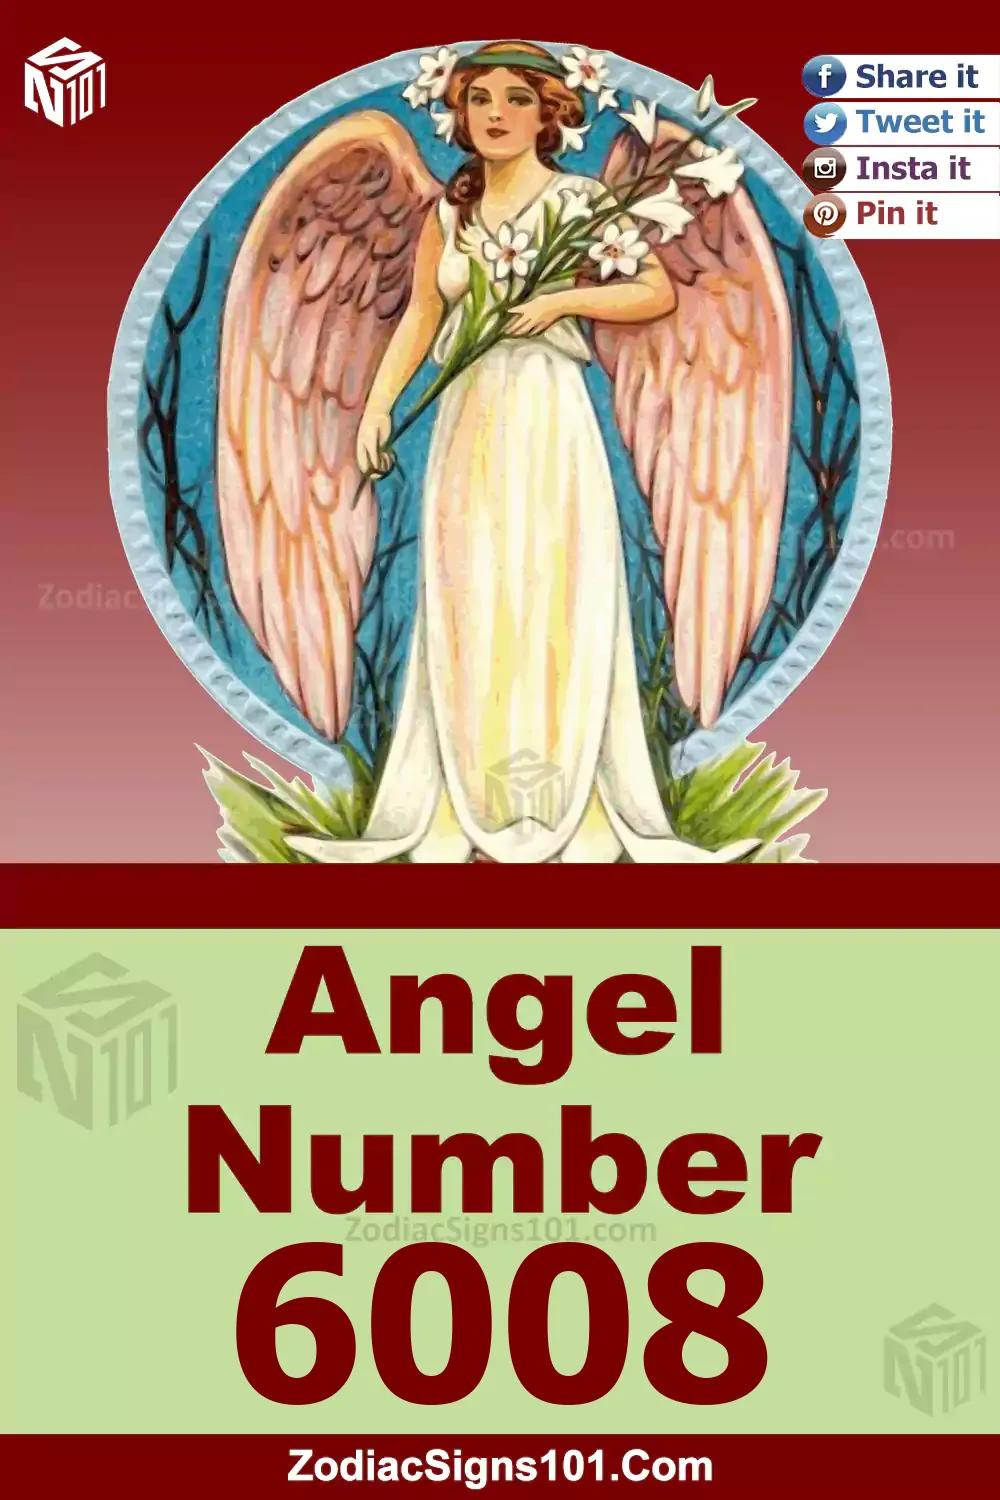 6008-Angel-Number-Meaning.jpg